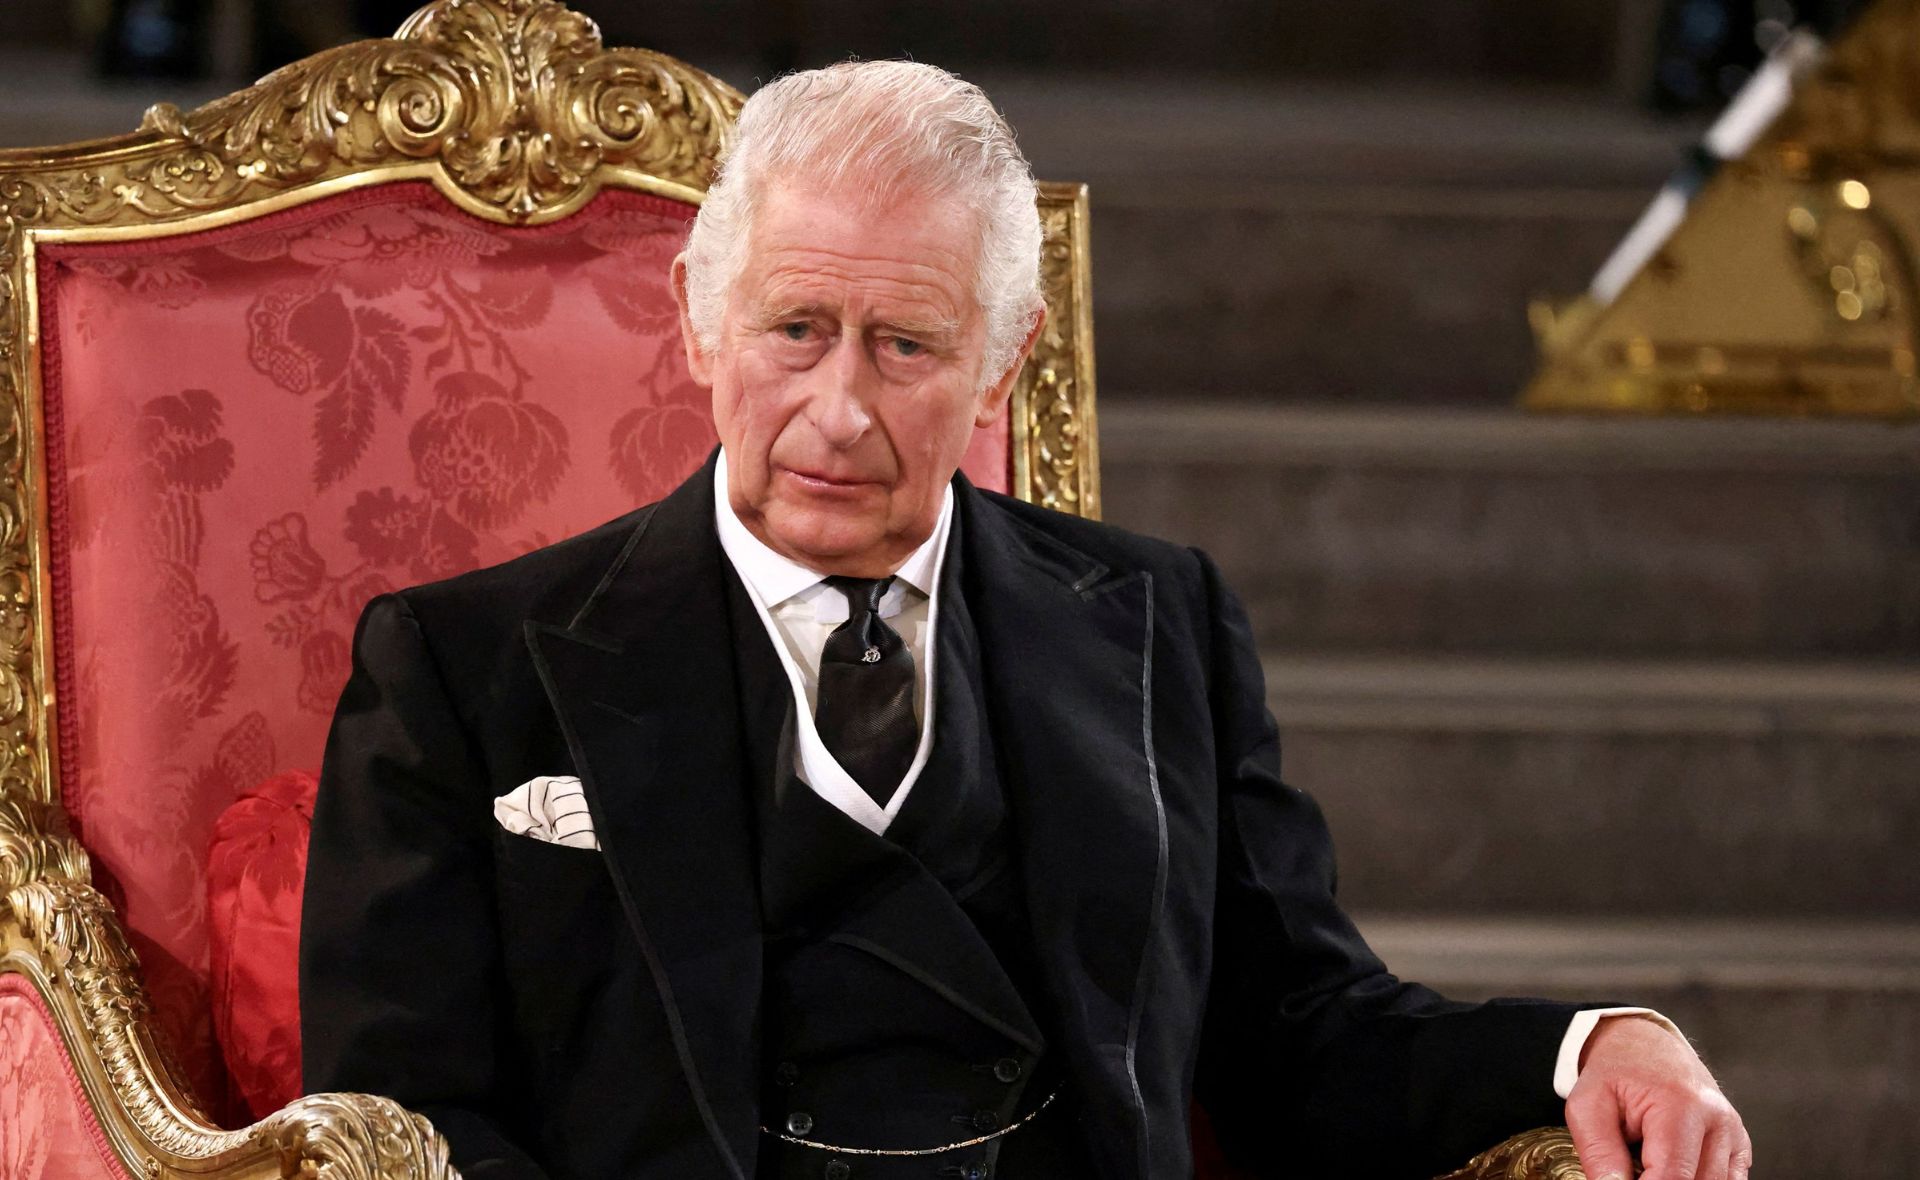 King Charles III Coronation: Everything you need to know